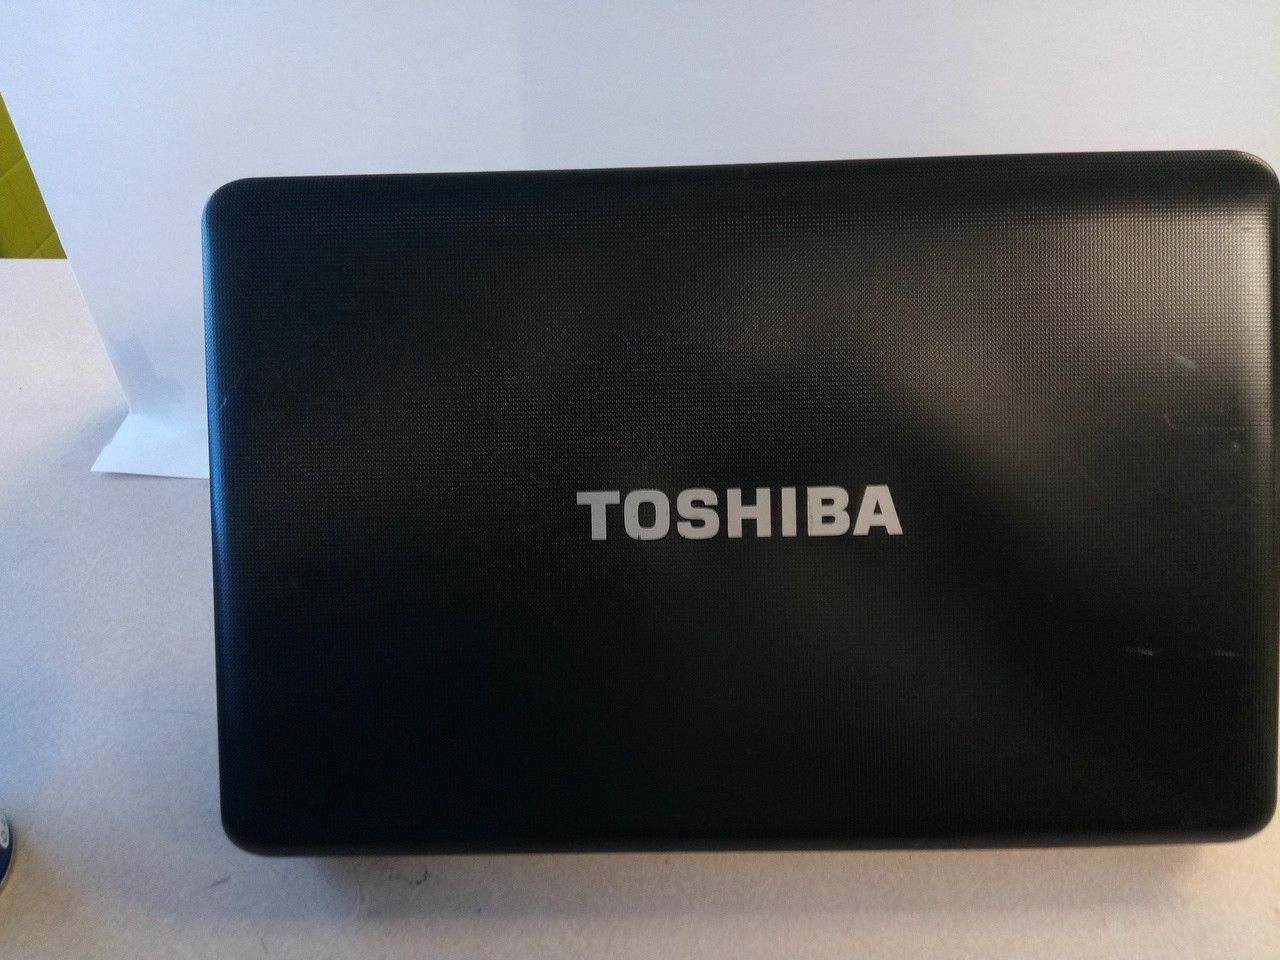 Toshiba Satellite C655D-S5302